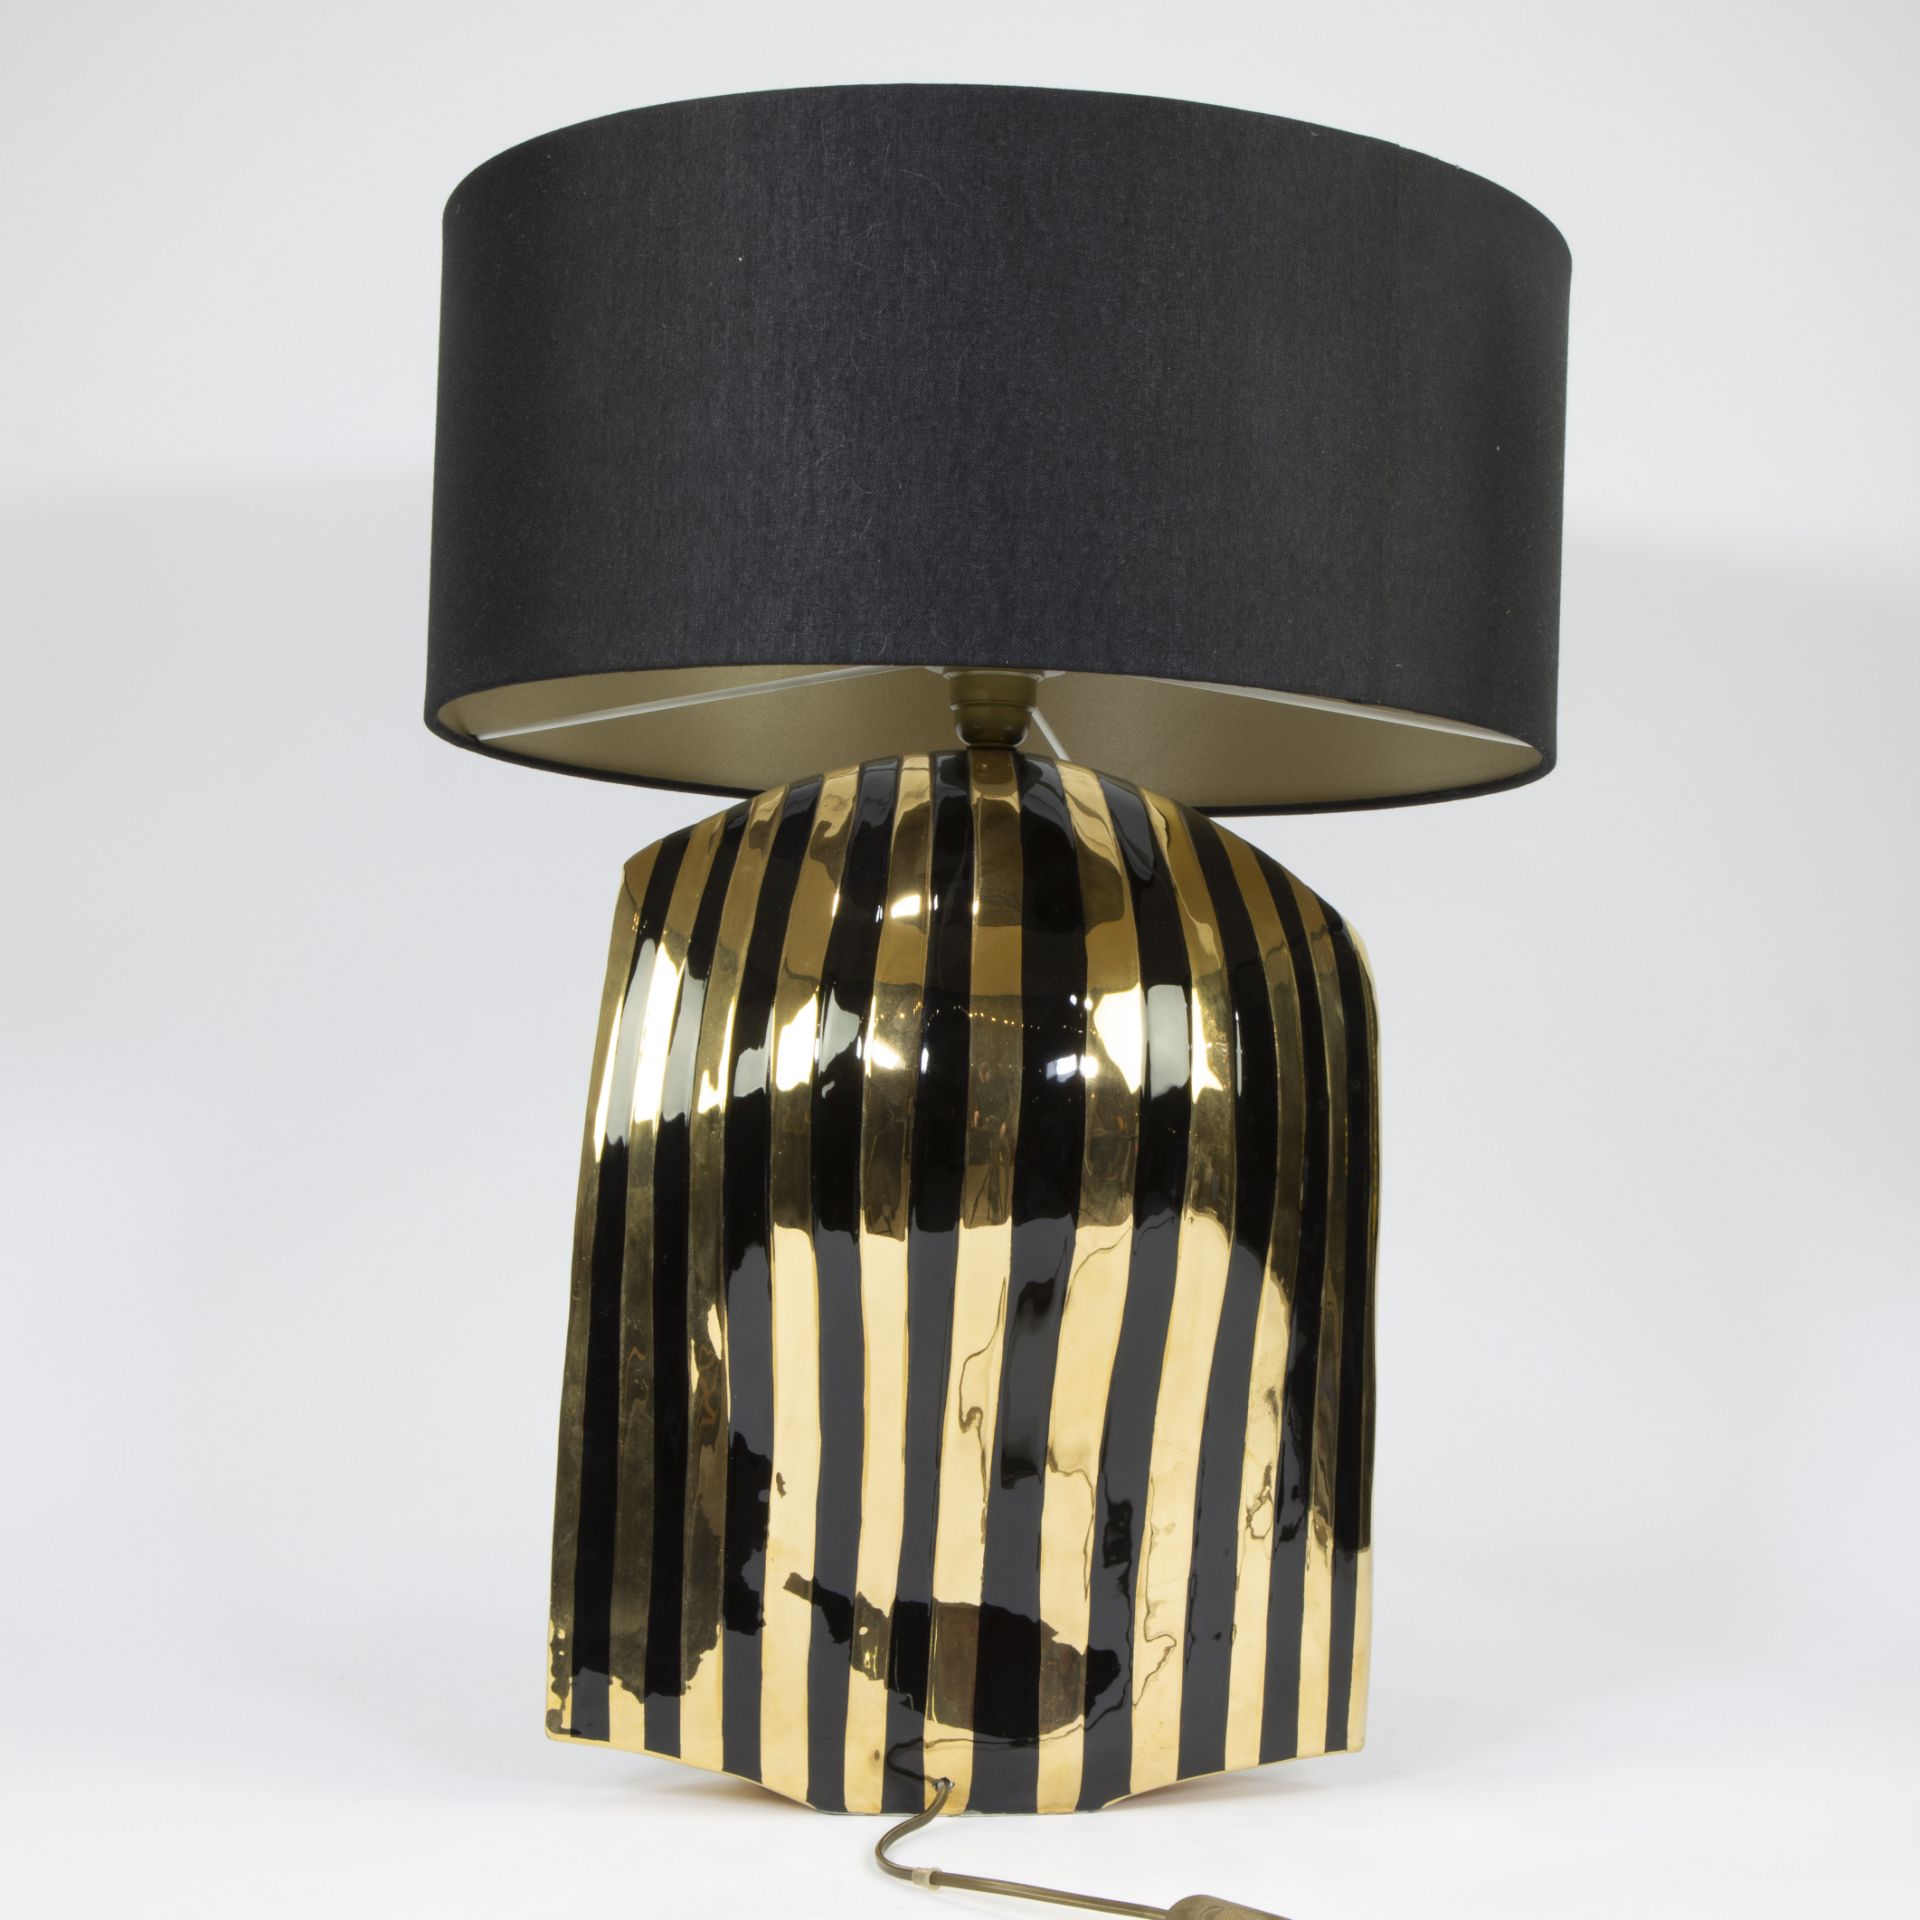 1970s Tutankhamun black enamelled ceramic table lamp decorated with gold - Image 3 of 4